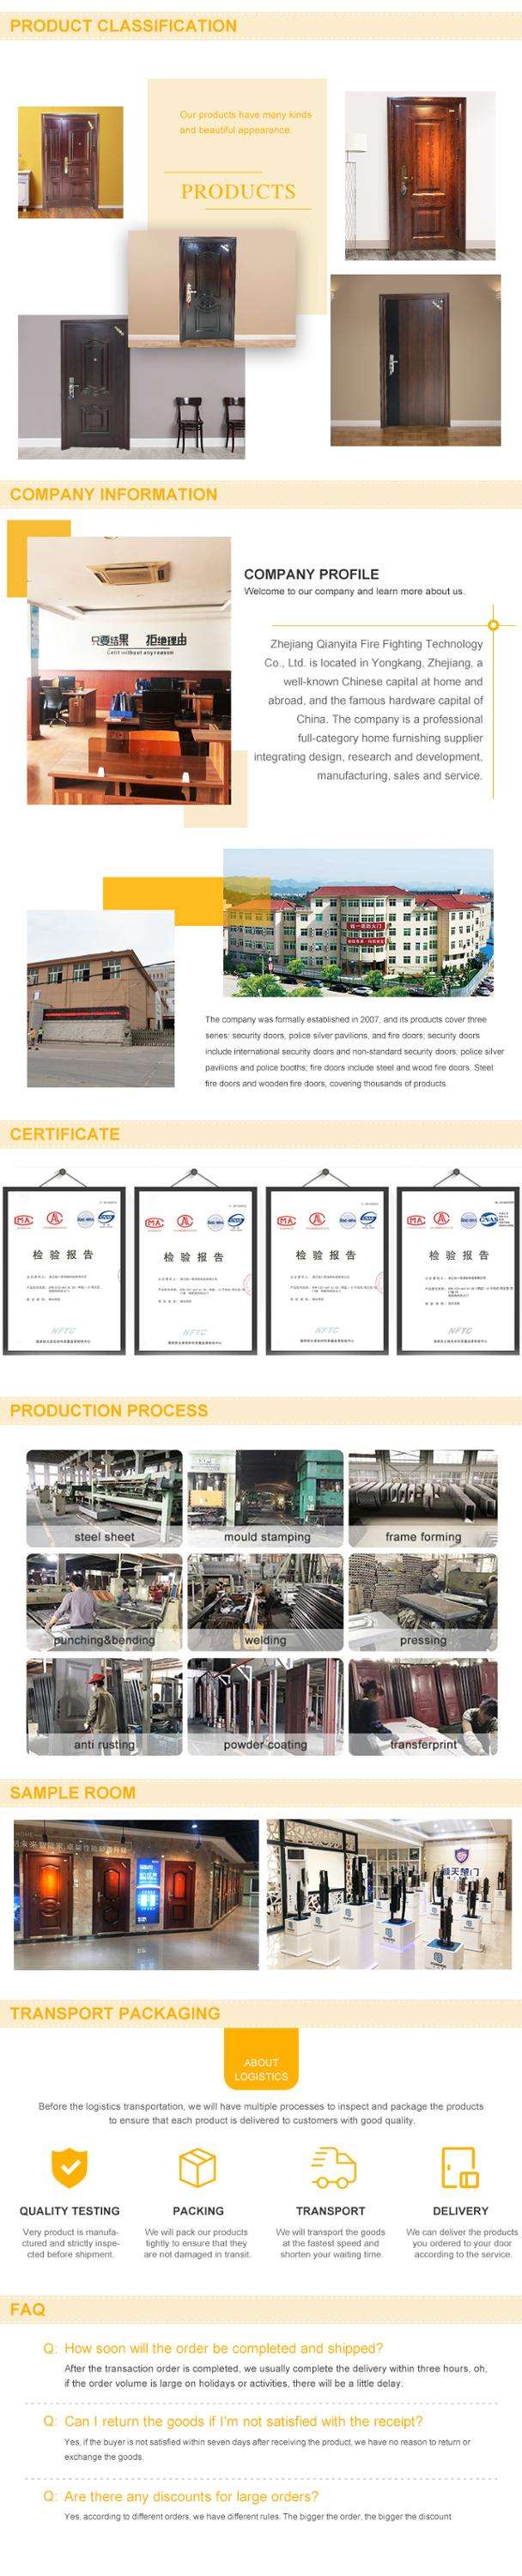 Company security design iron fire proof factory price China exteriorblack steel door in Bangladesh